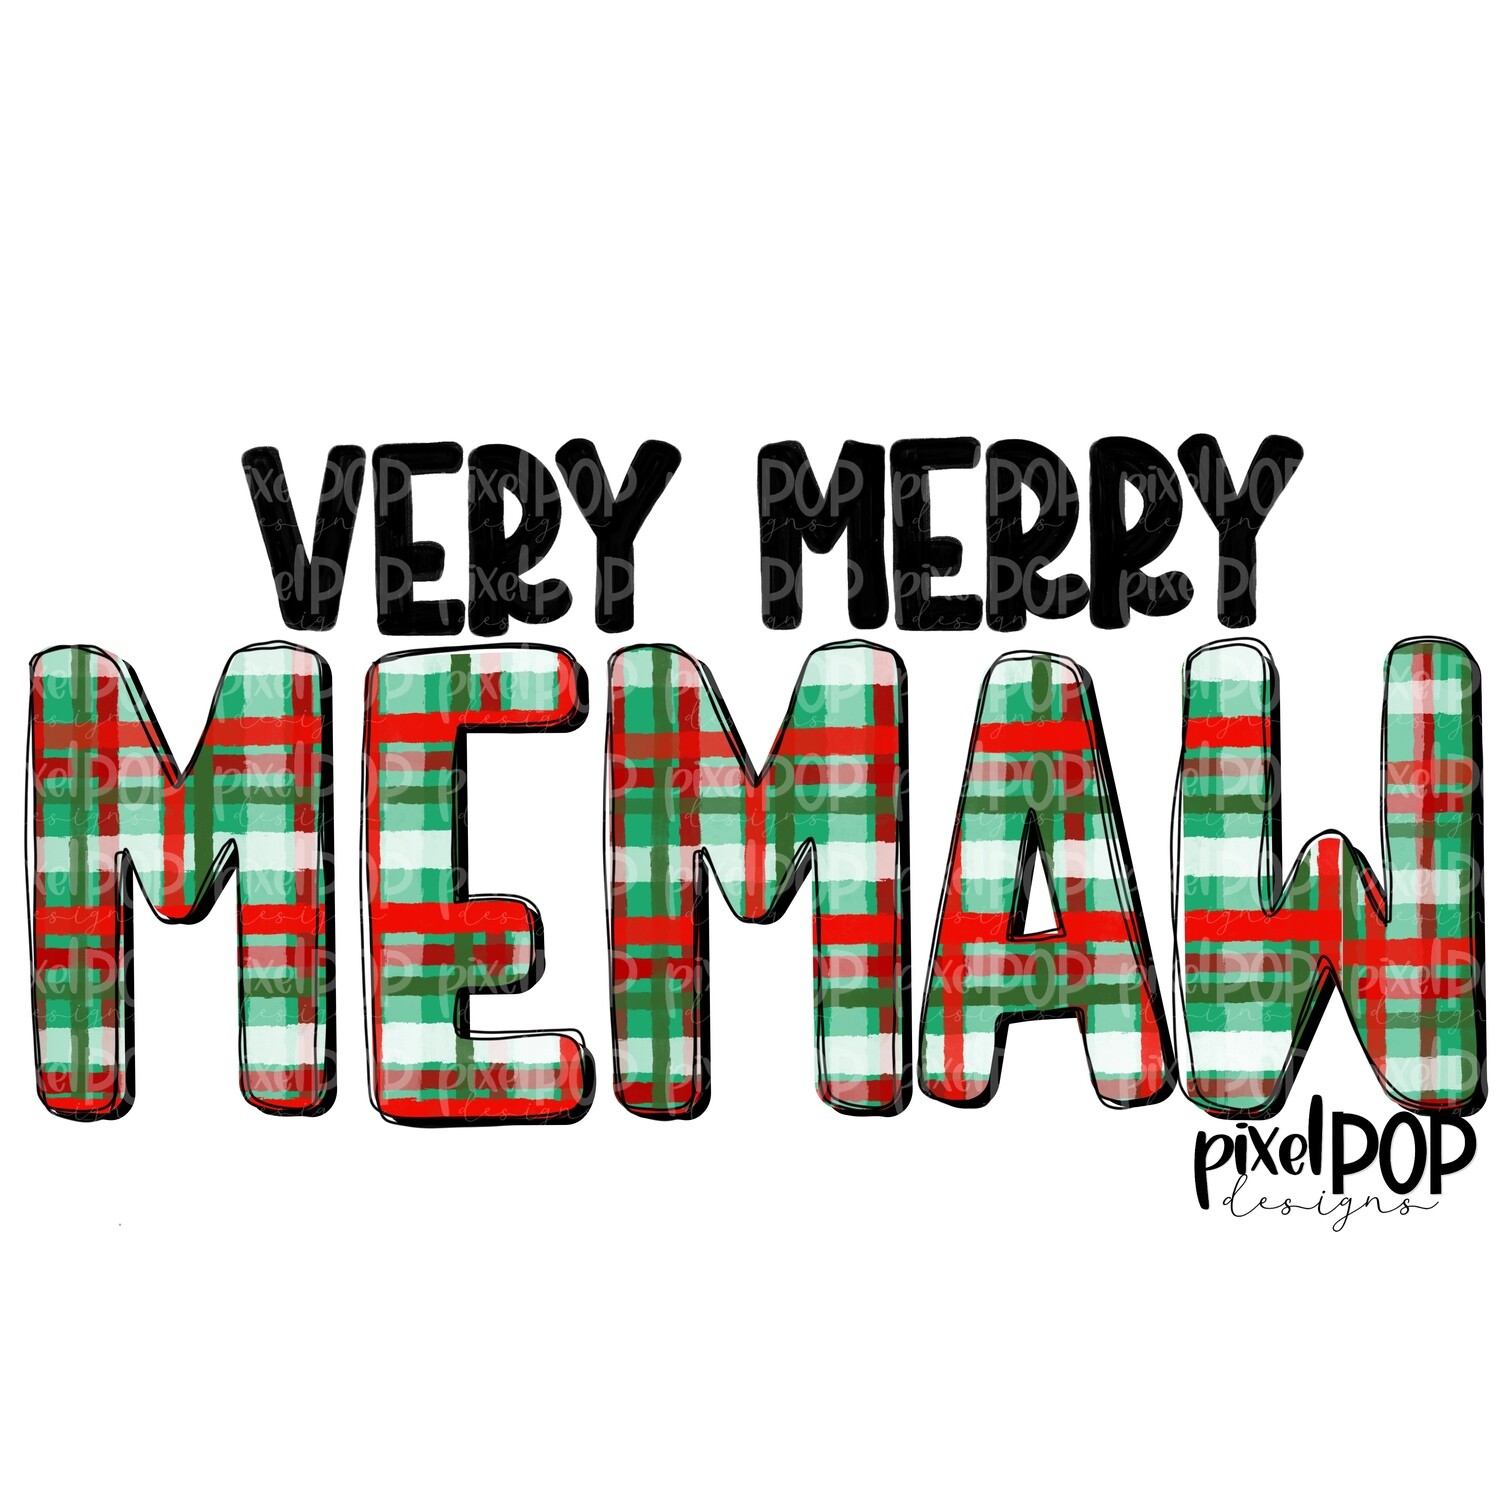 Very Merry Memaw Christmas PLAID PNG | Christmas Design | Sublimation Art | Digital Download | Printable Artwork | Art